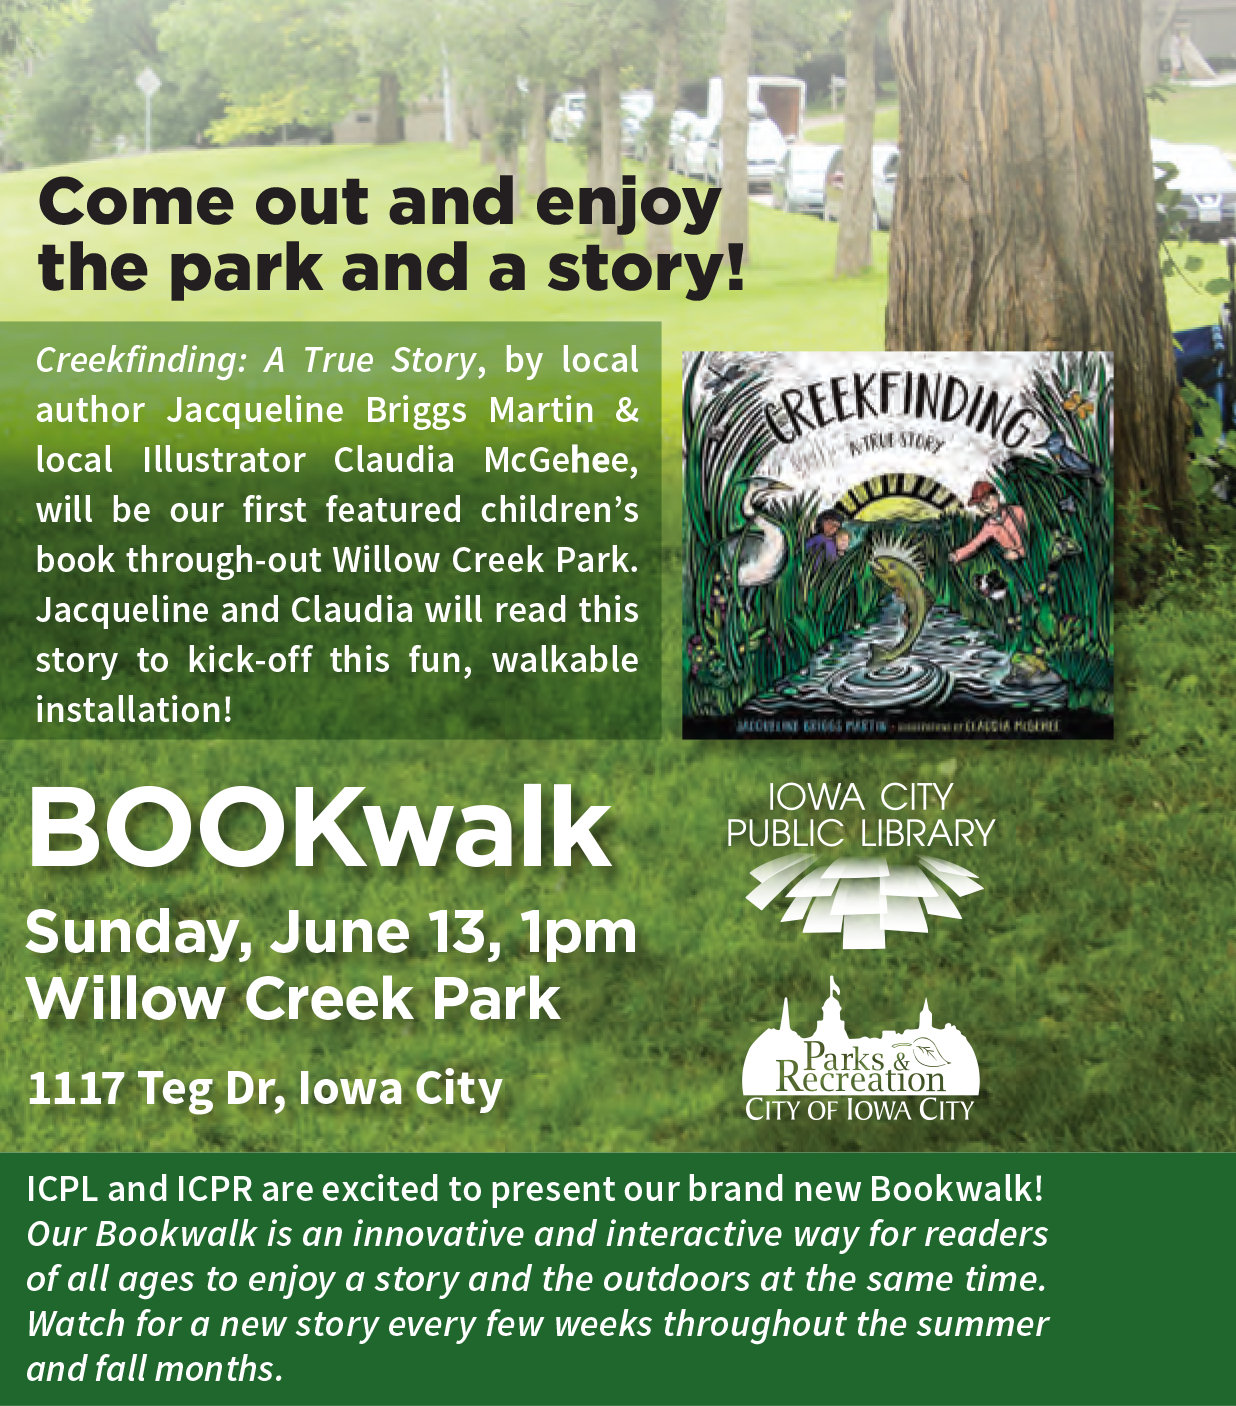 Bookwalk Kickoff Iowa City Public Library